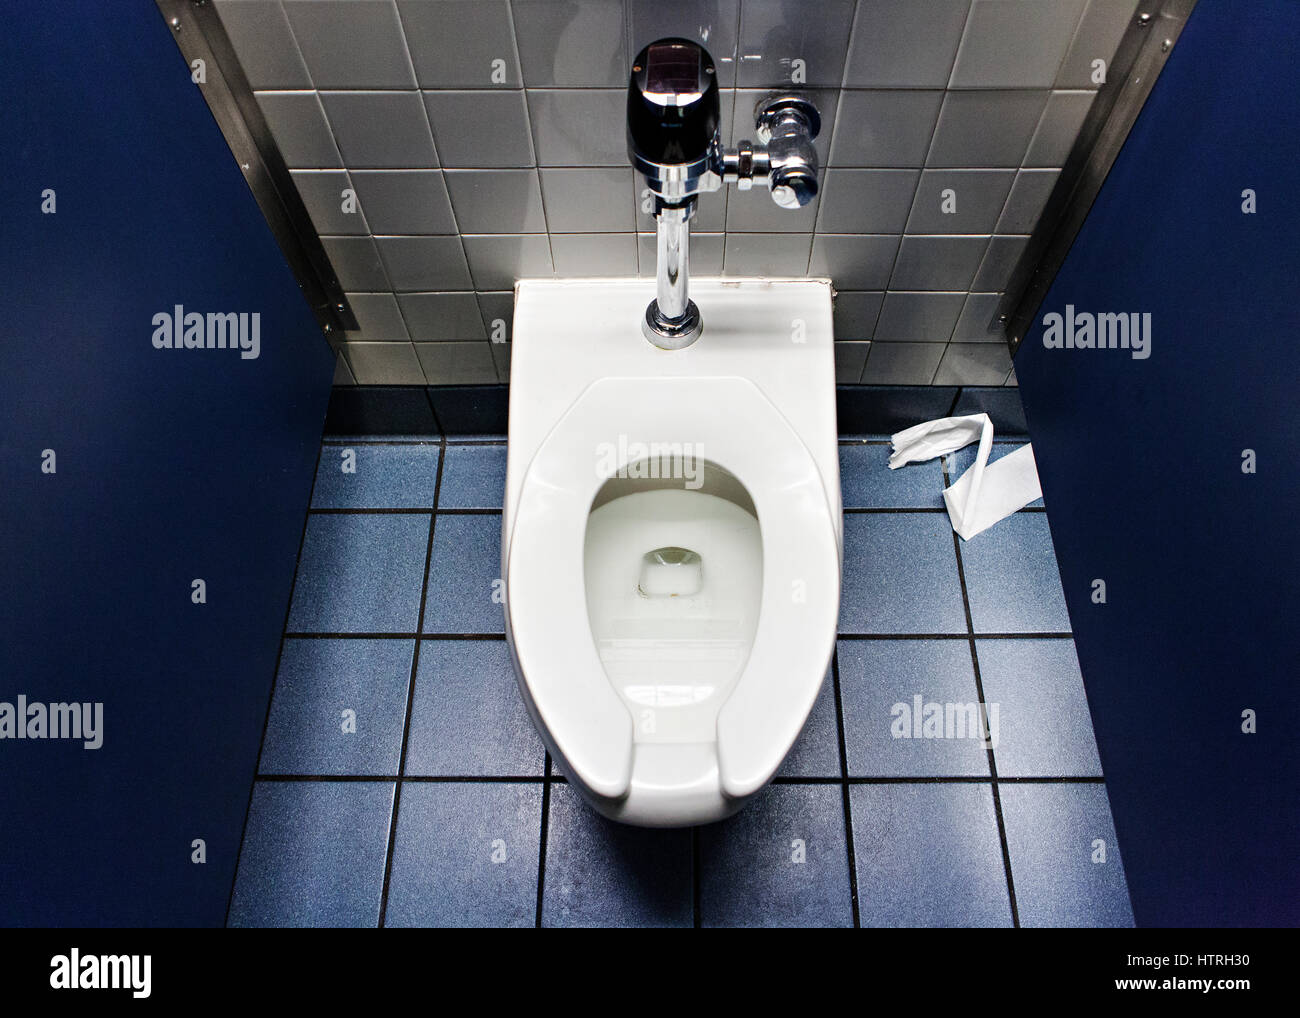 Public toilet. Stock Photo